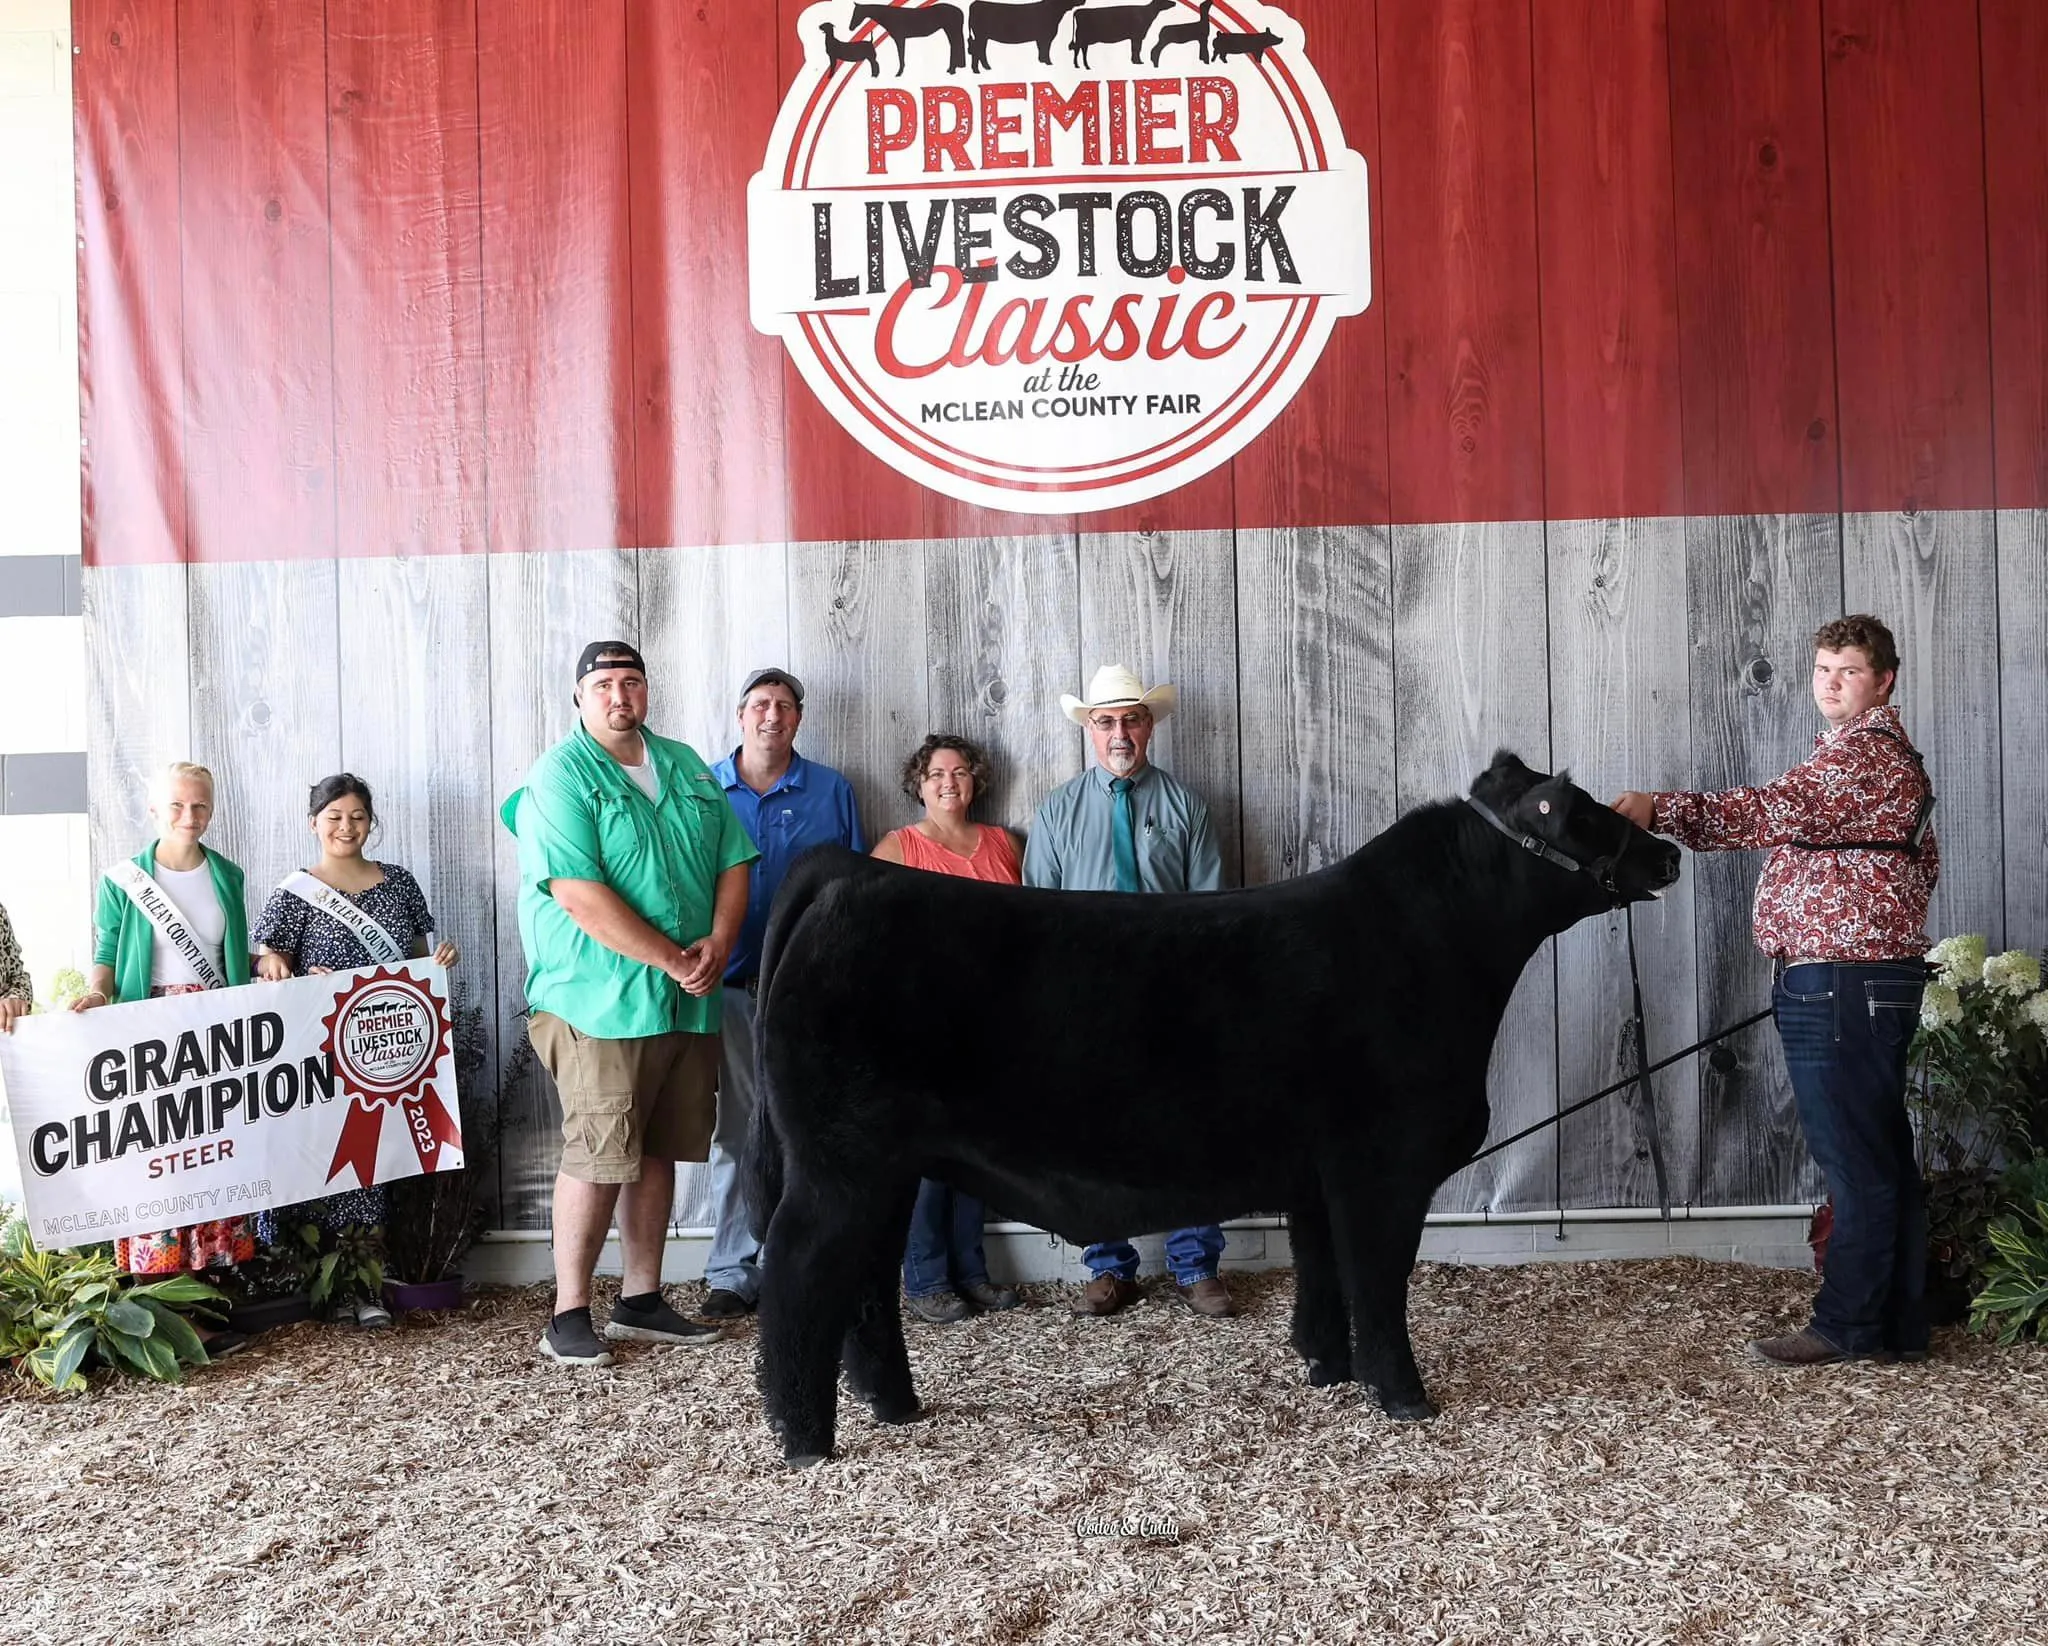 Levi Hinshaw - Grand Champion HIA 2023 at Premier Livestock Classic - McLean County Fair - Illinois